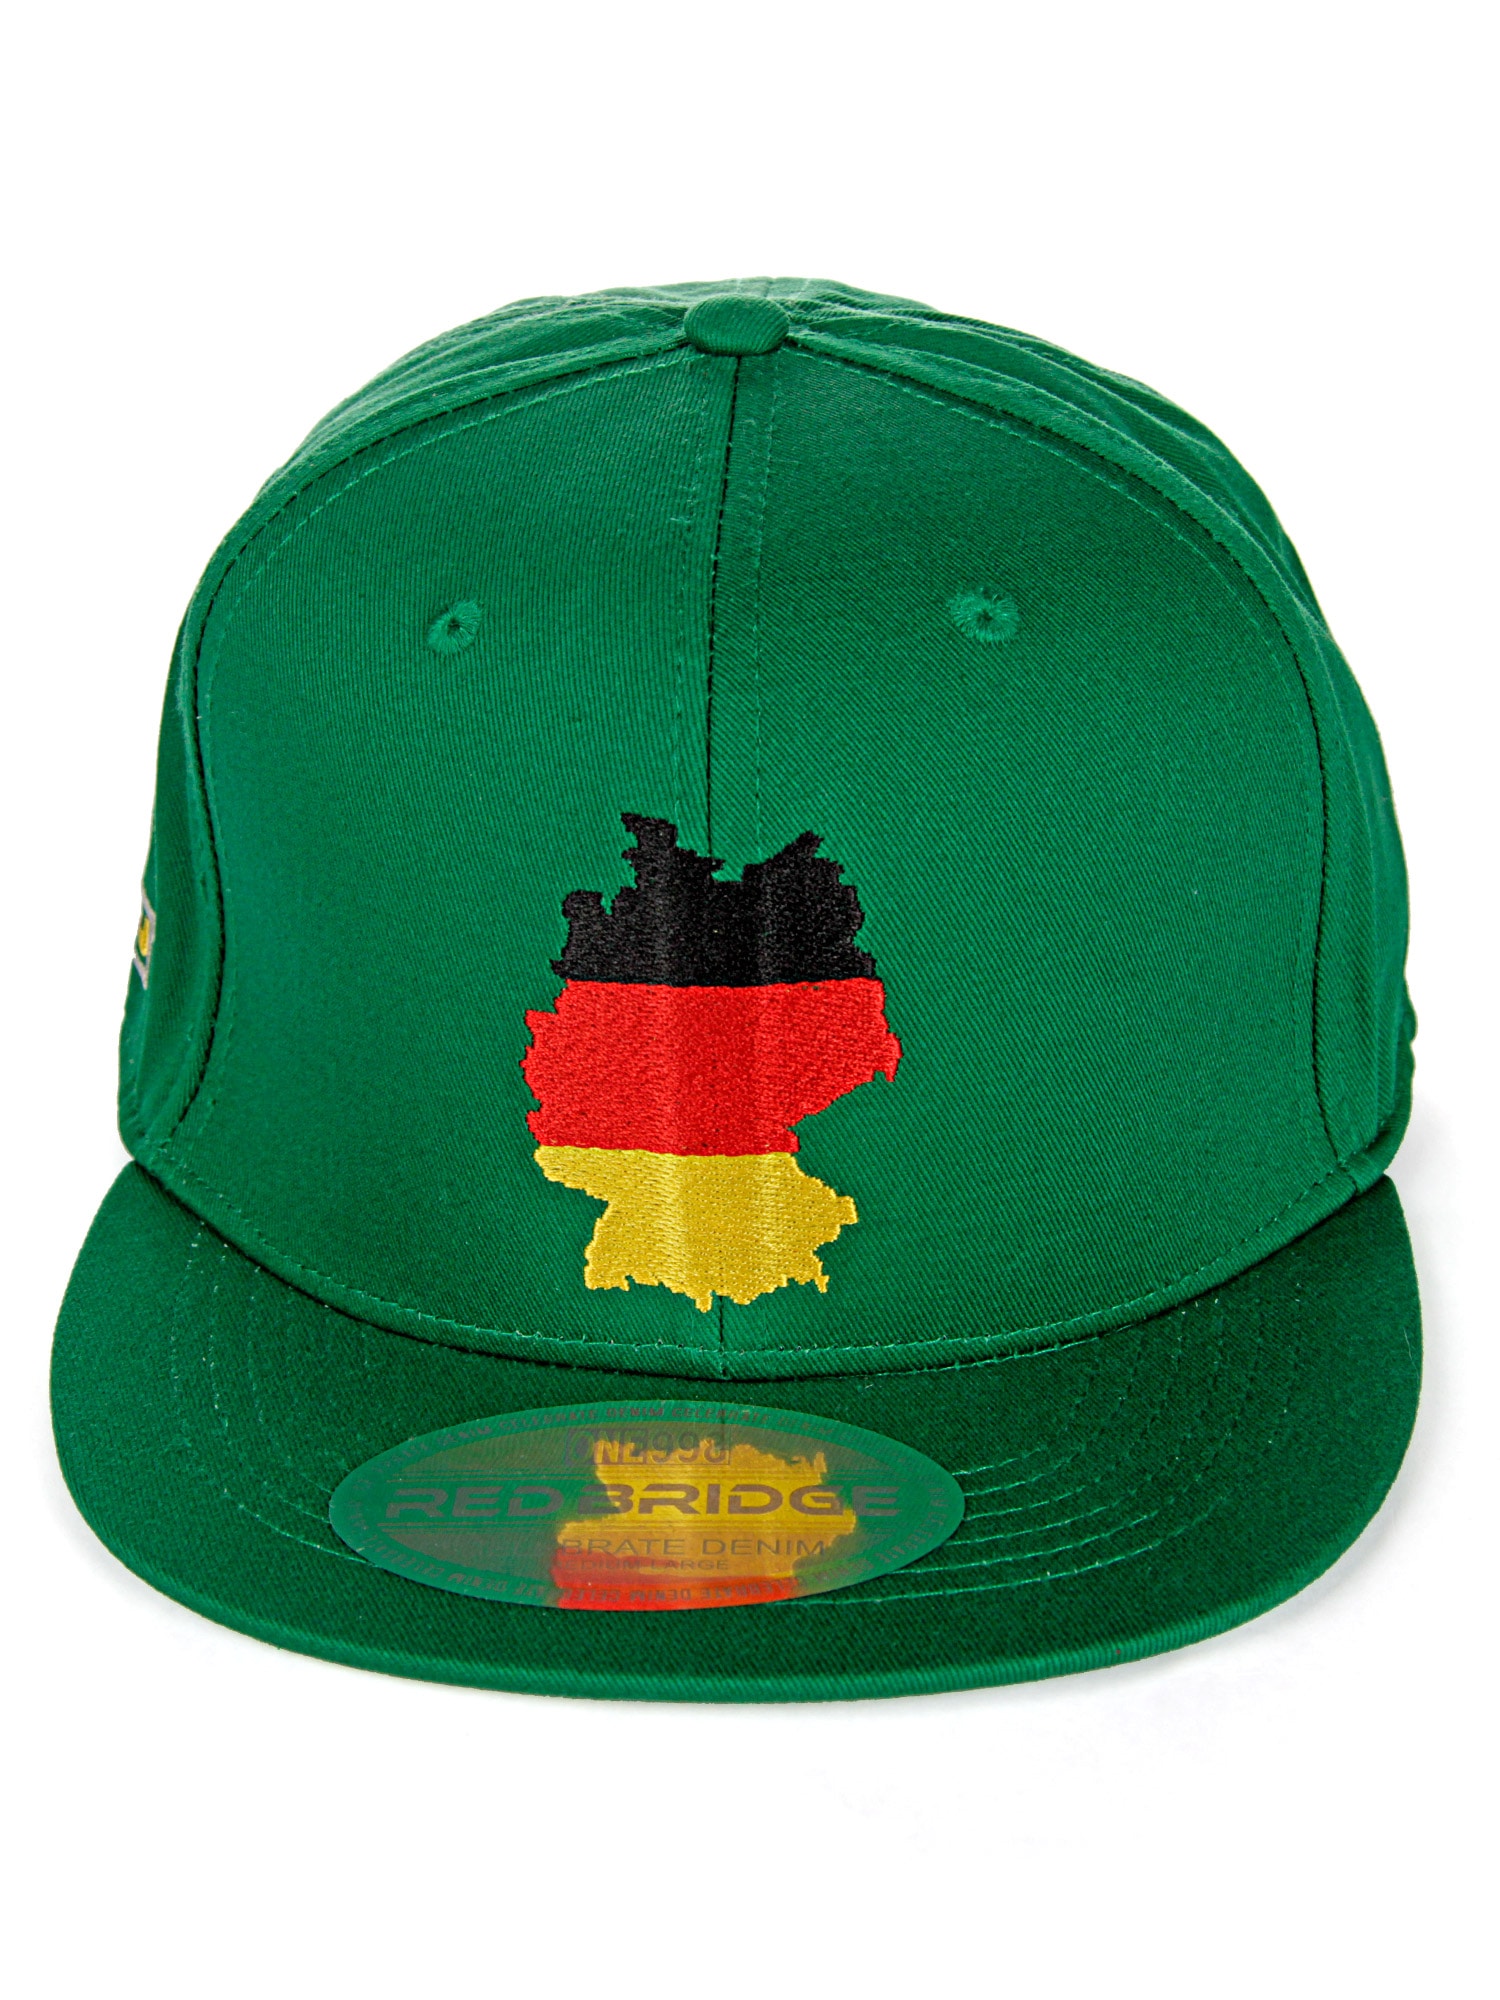 RedBridge Baseball Cap »Shoreham«, mit trendiger Deutschland-Stickerei